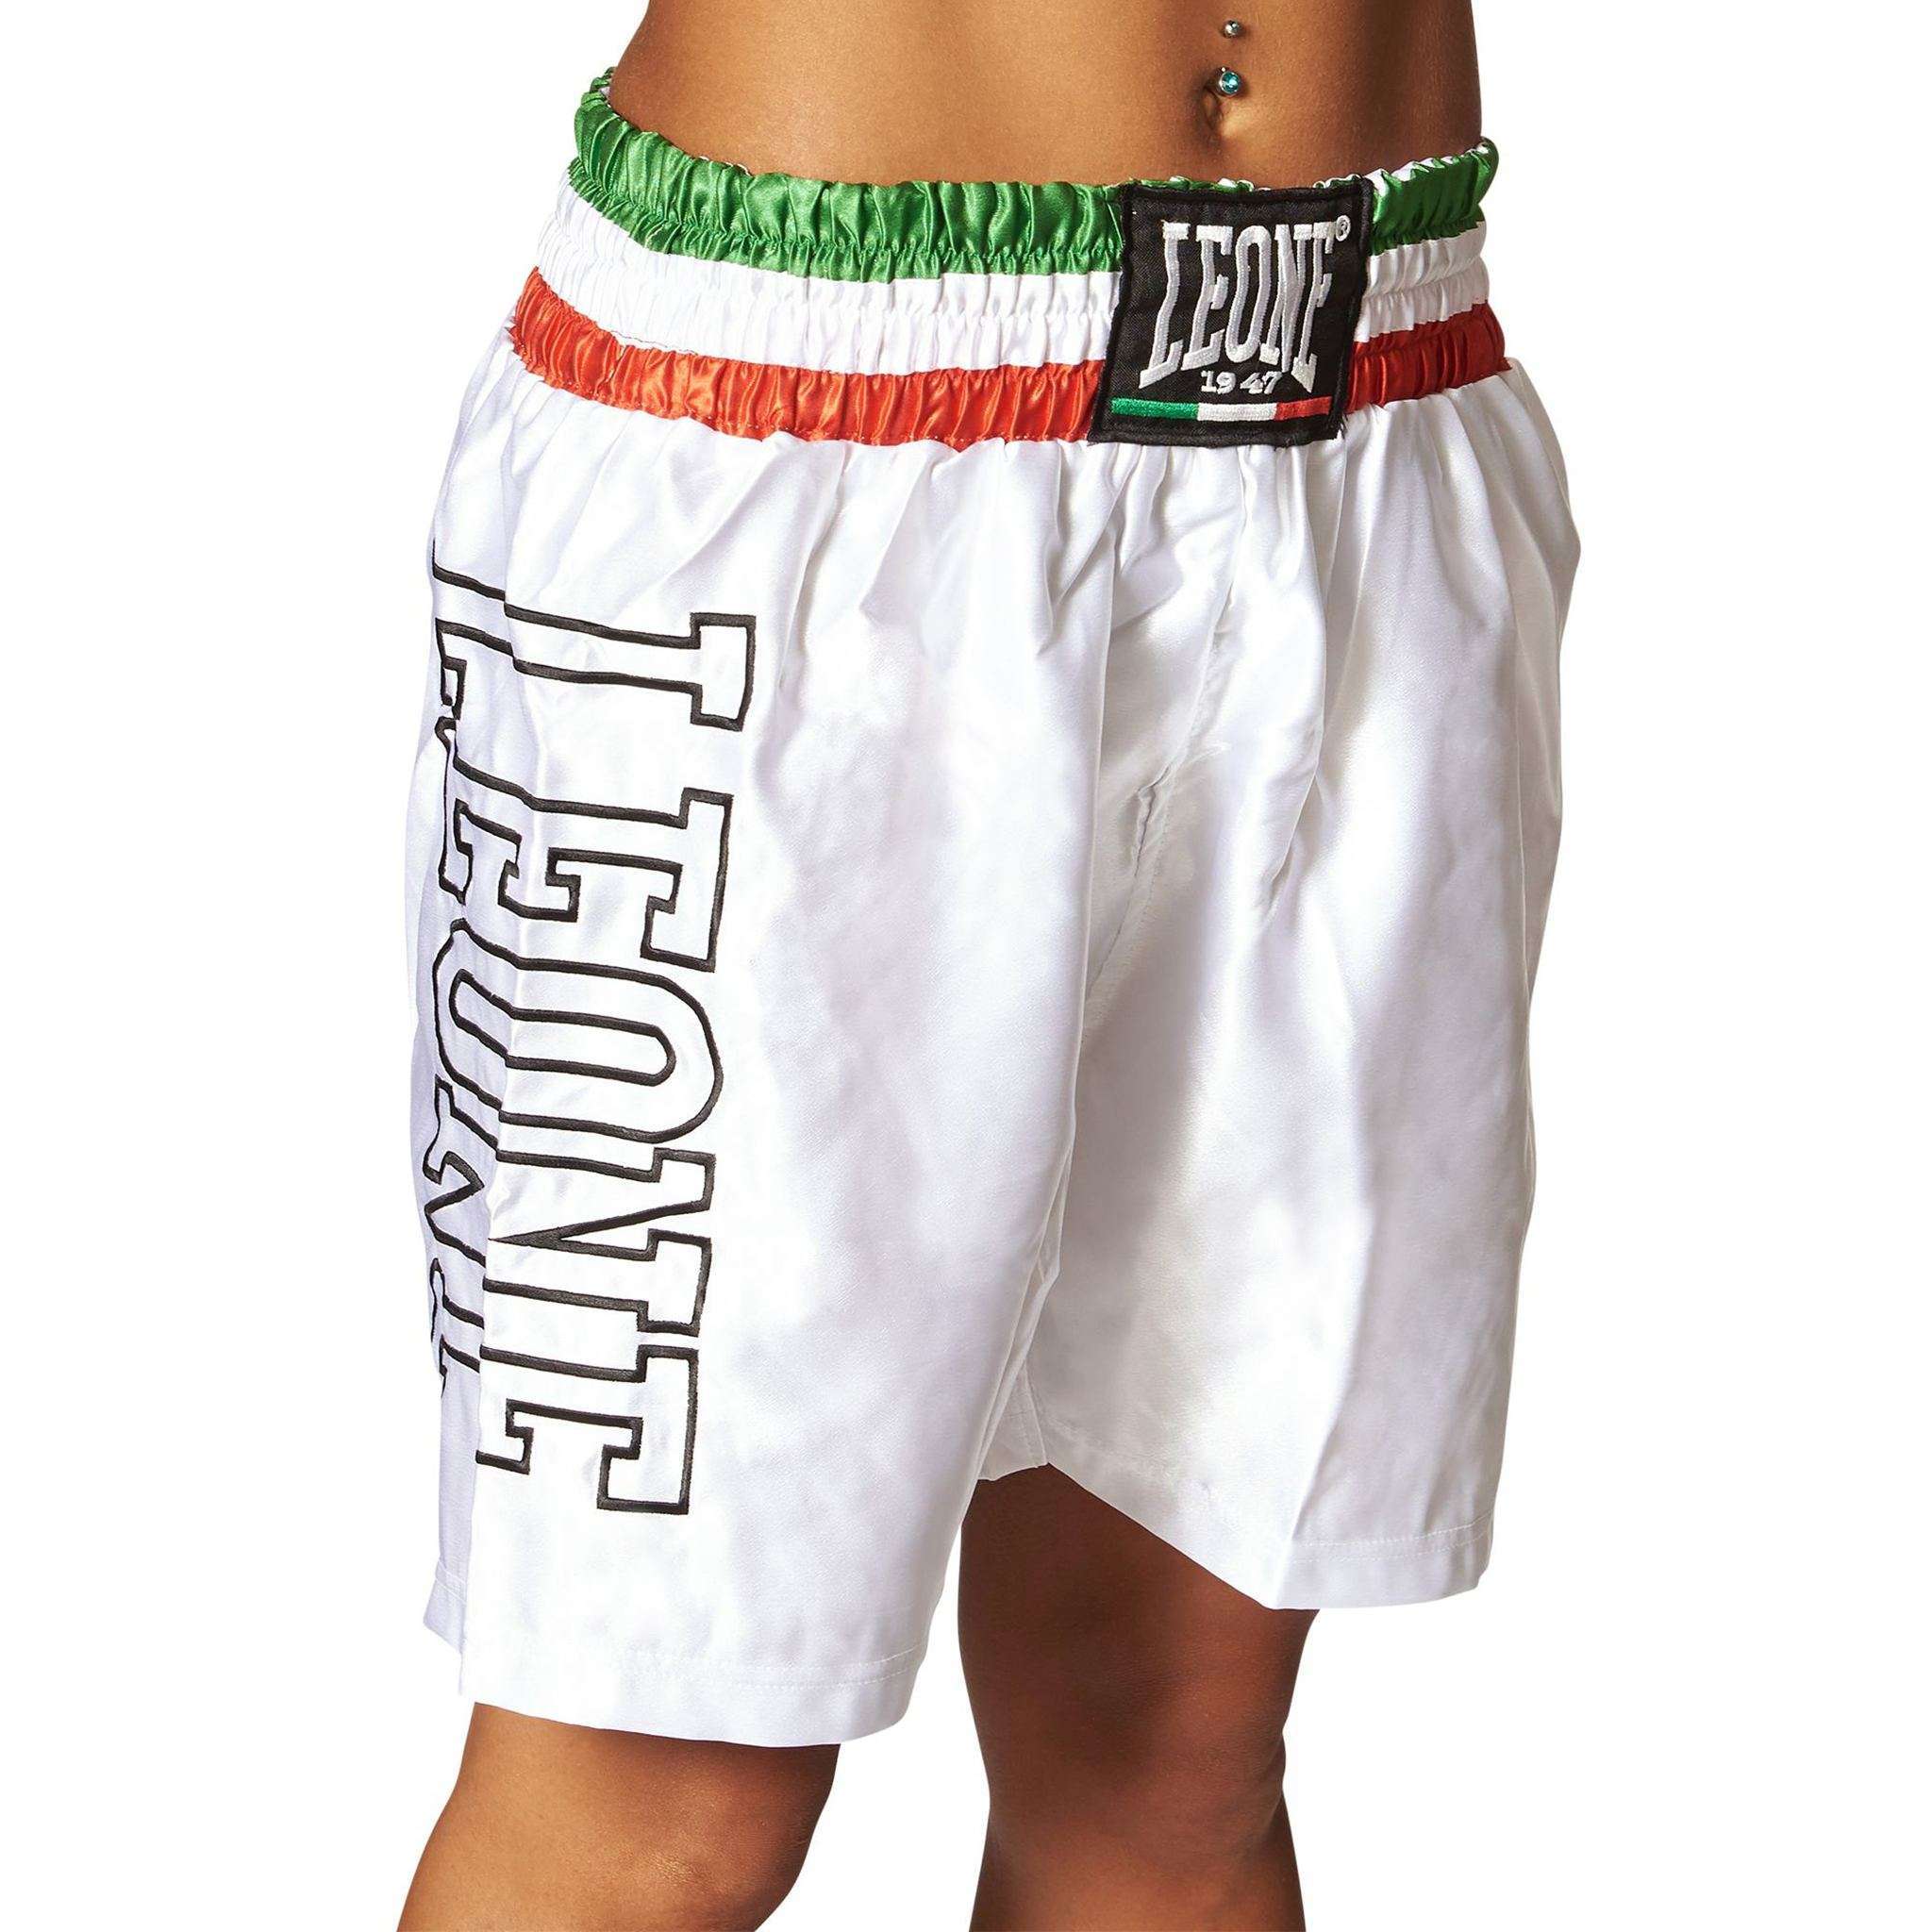 Pantalones De Boxeo Ab733 - Pantalones Satén Competicion  MKP